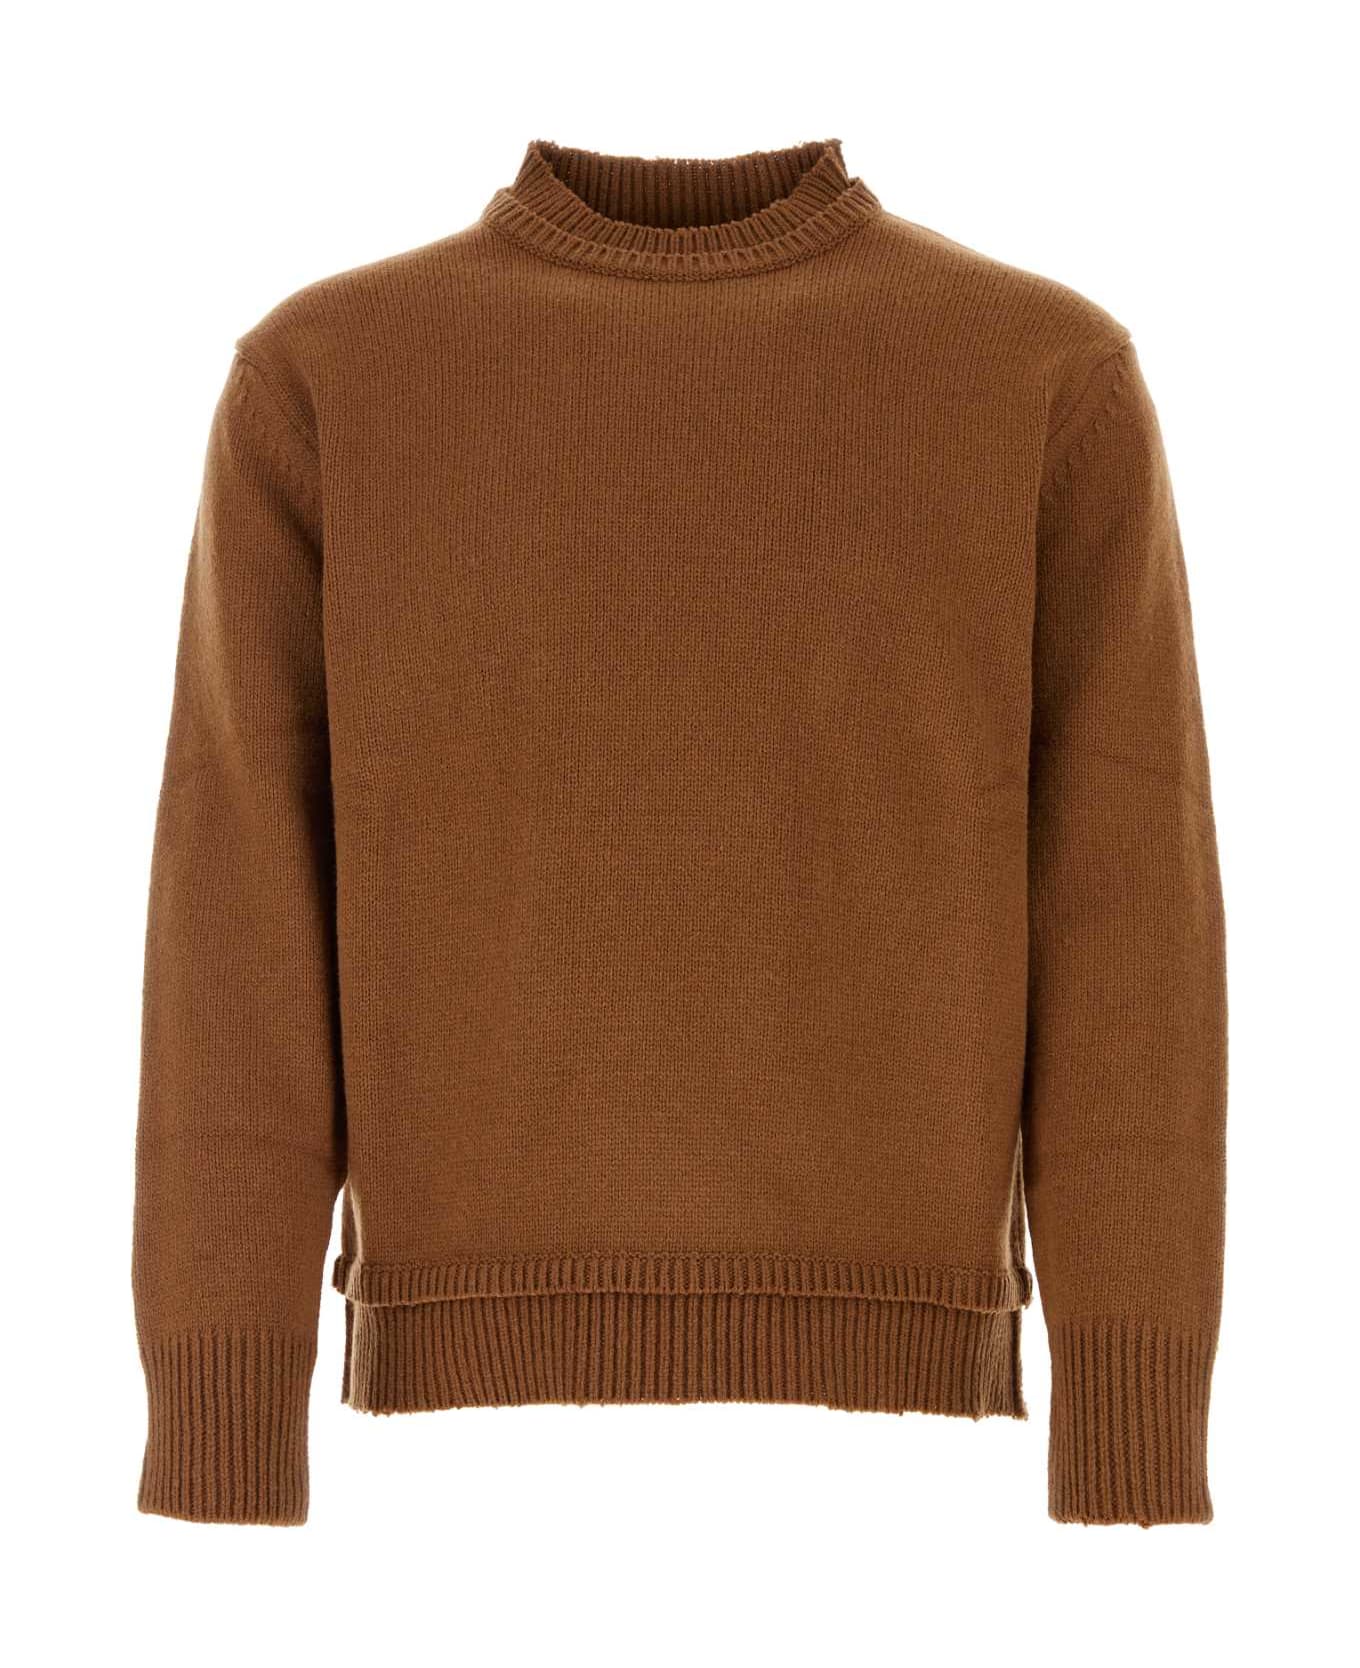 Maison Margiela Wool Blend Sweater - CAMEL